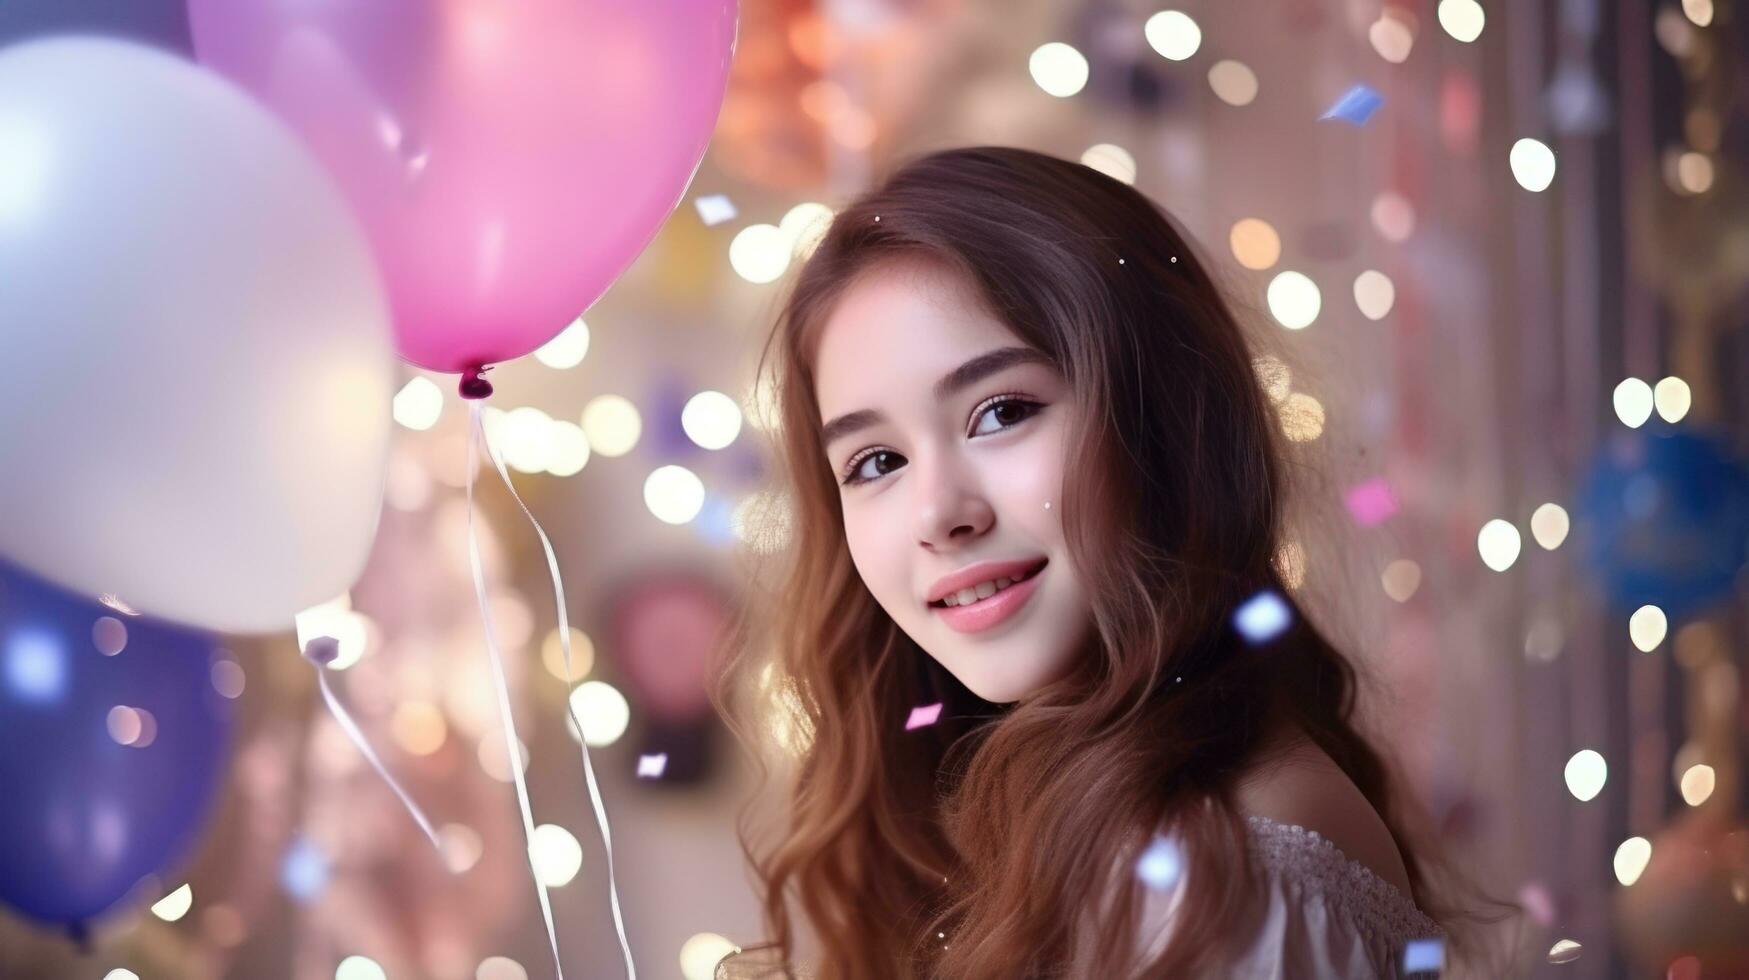 Happy Birthday background with girl photo